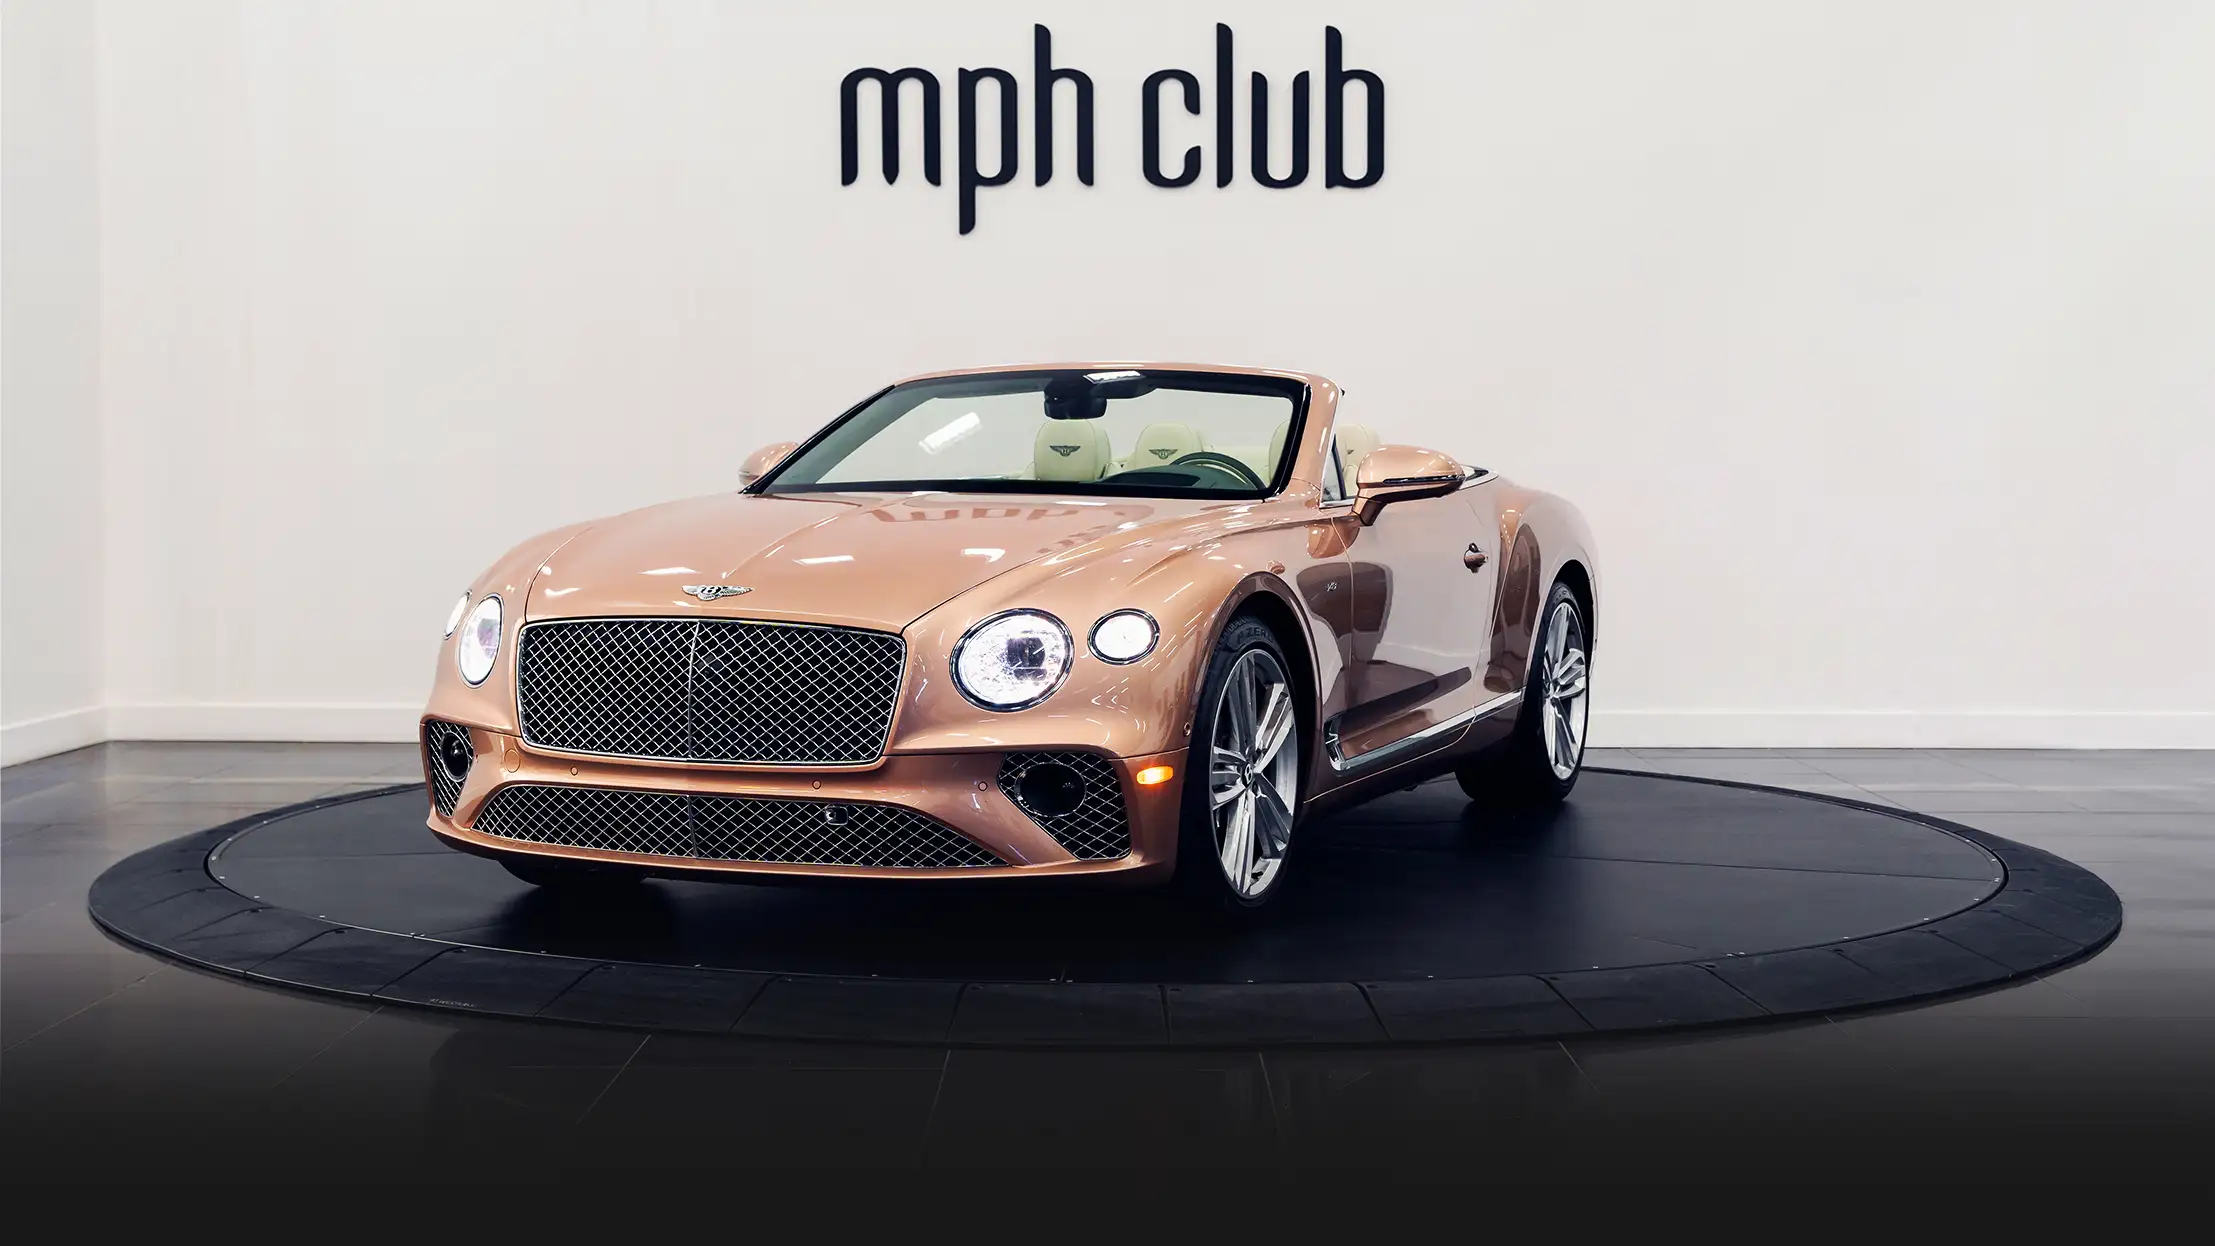 Gold Bentley Continental GTC rental profile view - mph club